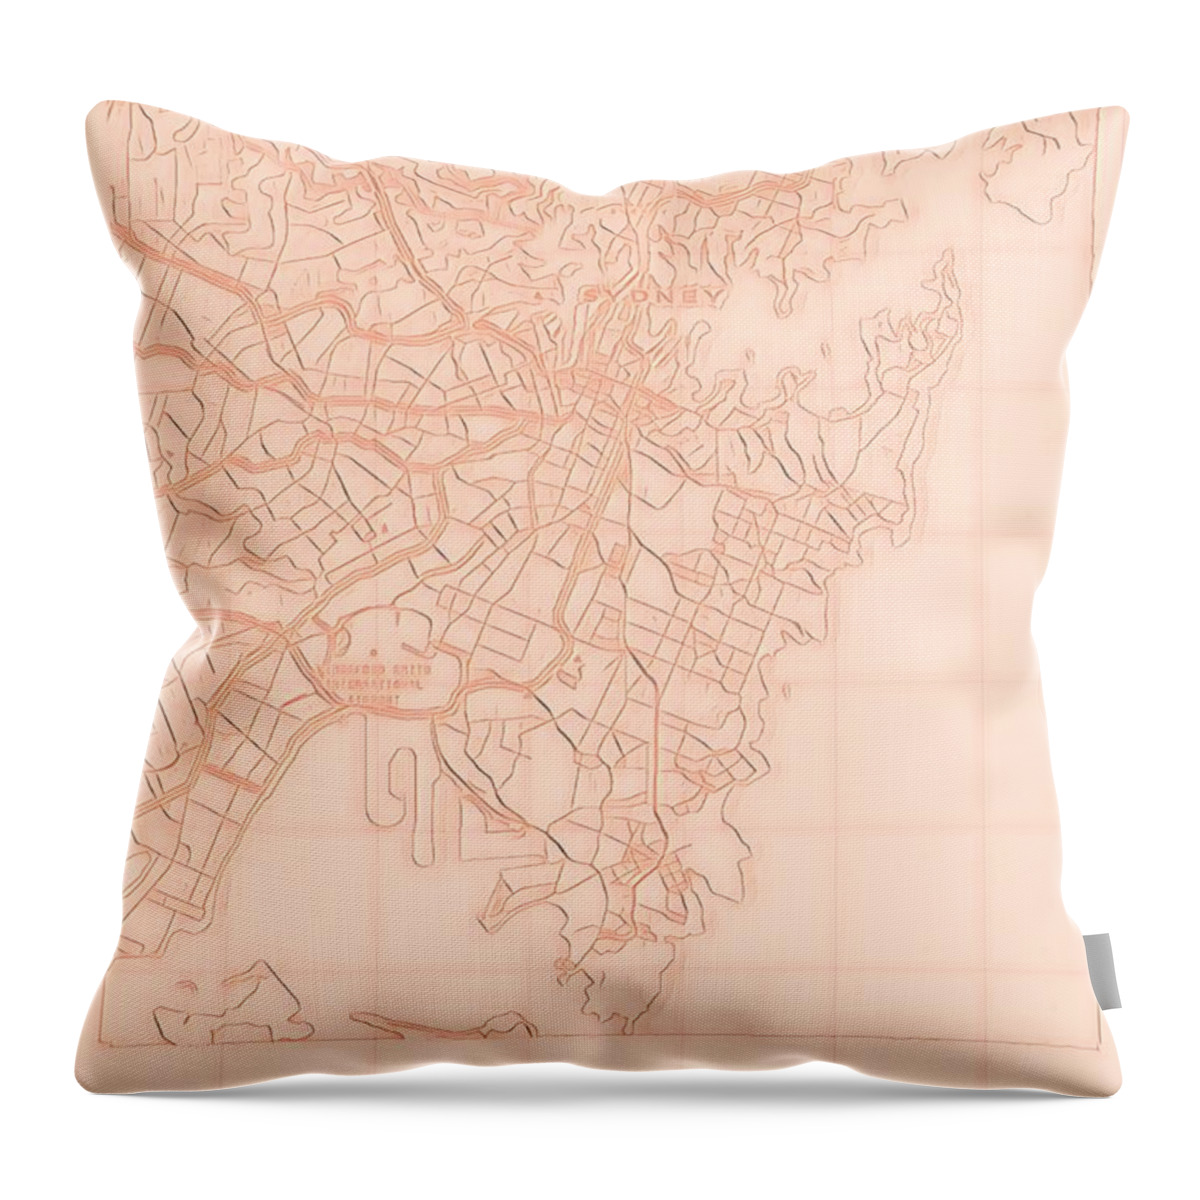 Sydney Throw Pillow featuring the digital art Sydney Blueprint City Map by HELGE Art Gallery